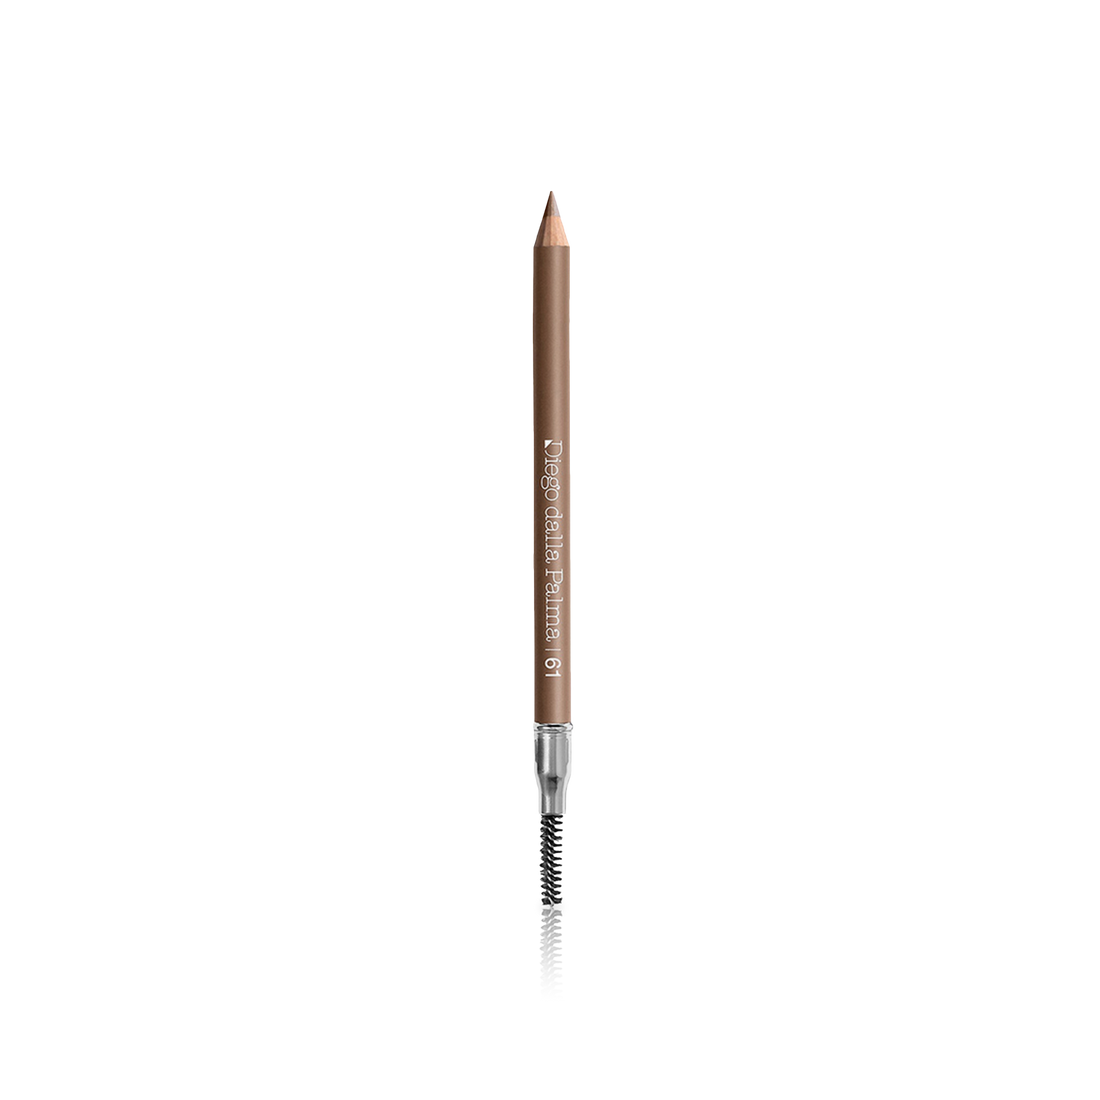 The Brow Studio Eyebrow Powder Pencil